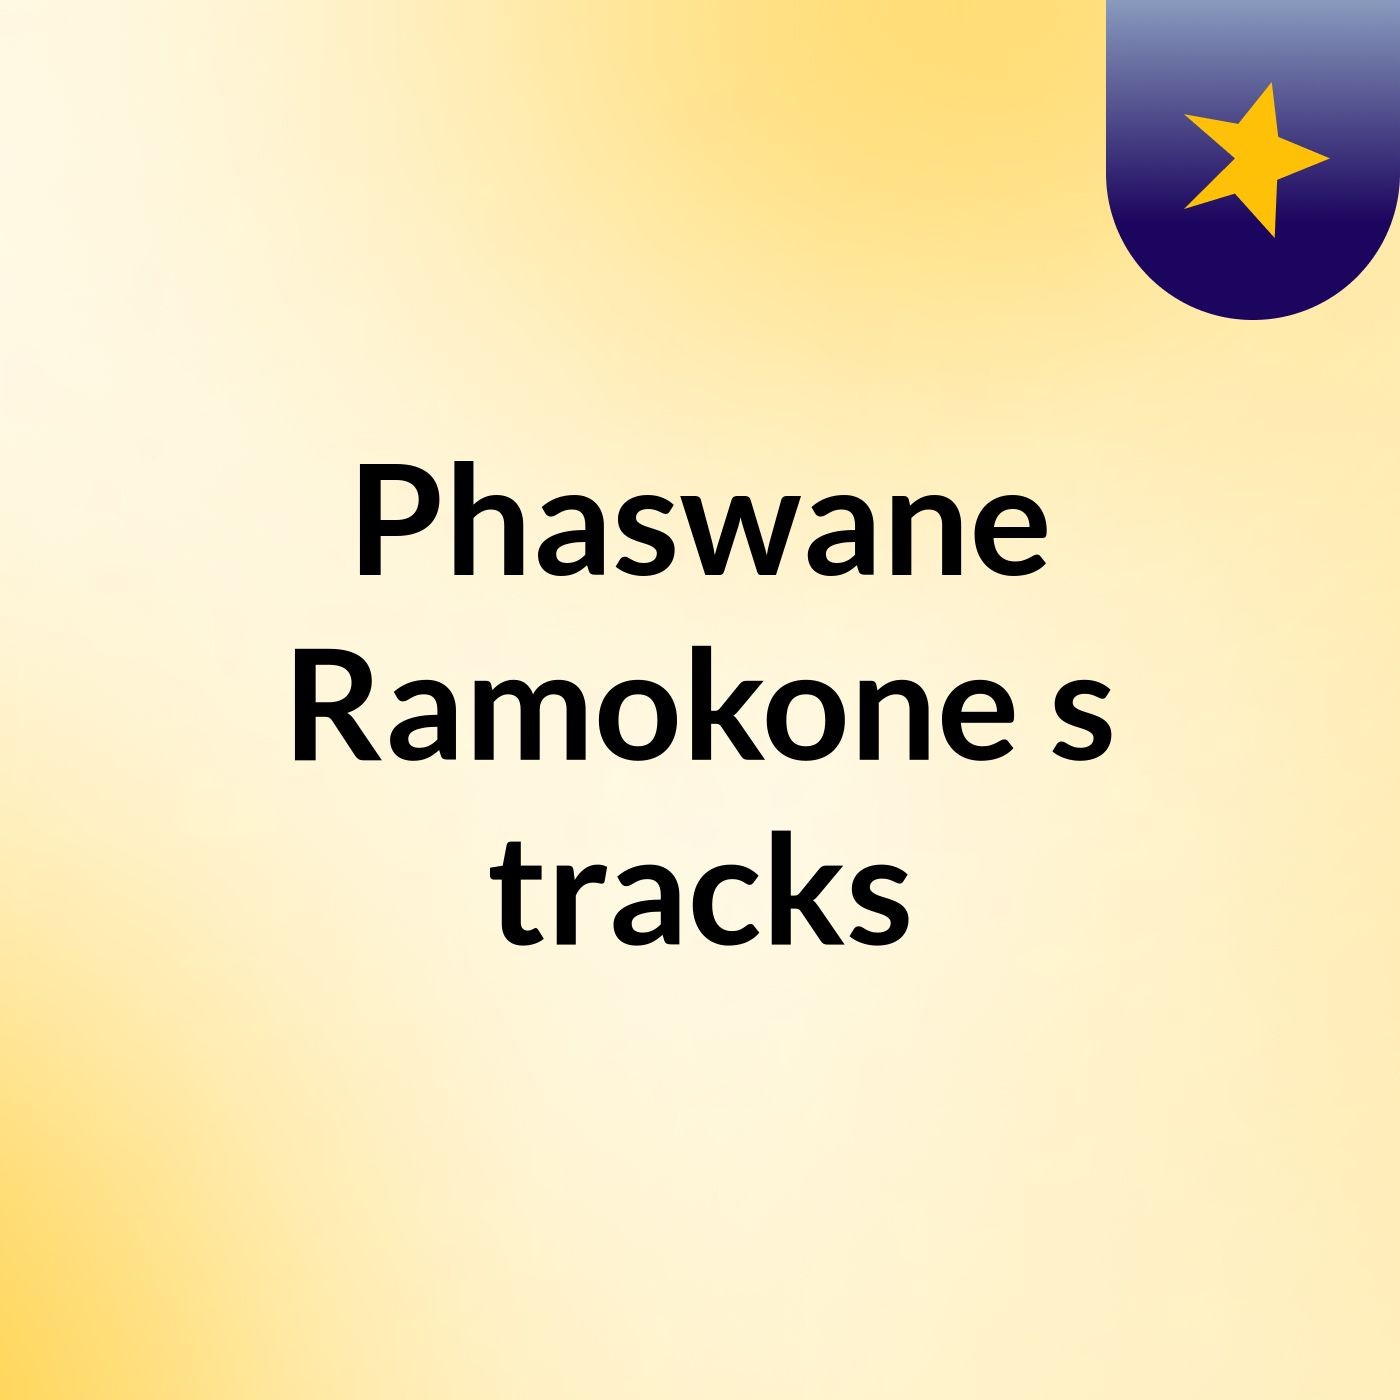 Phaswane Ramokone's tracks